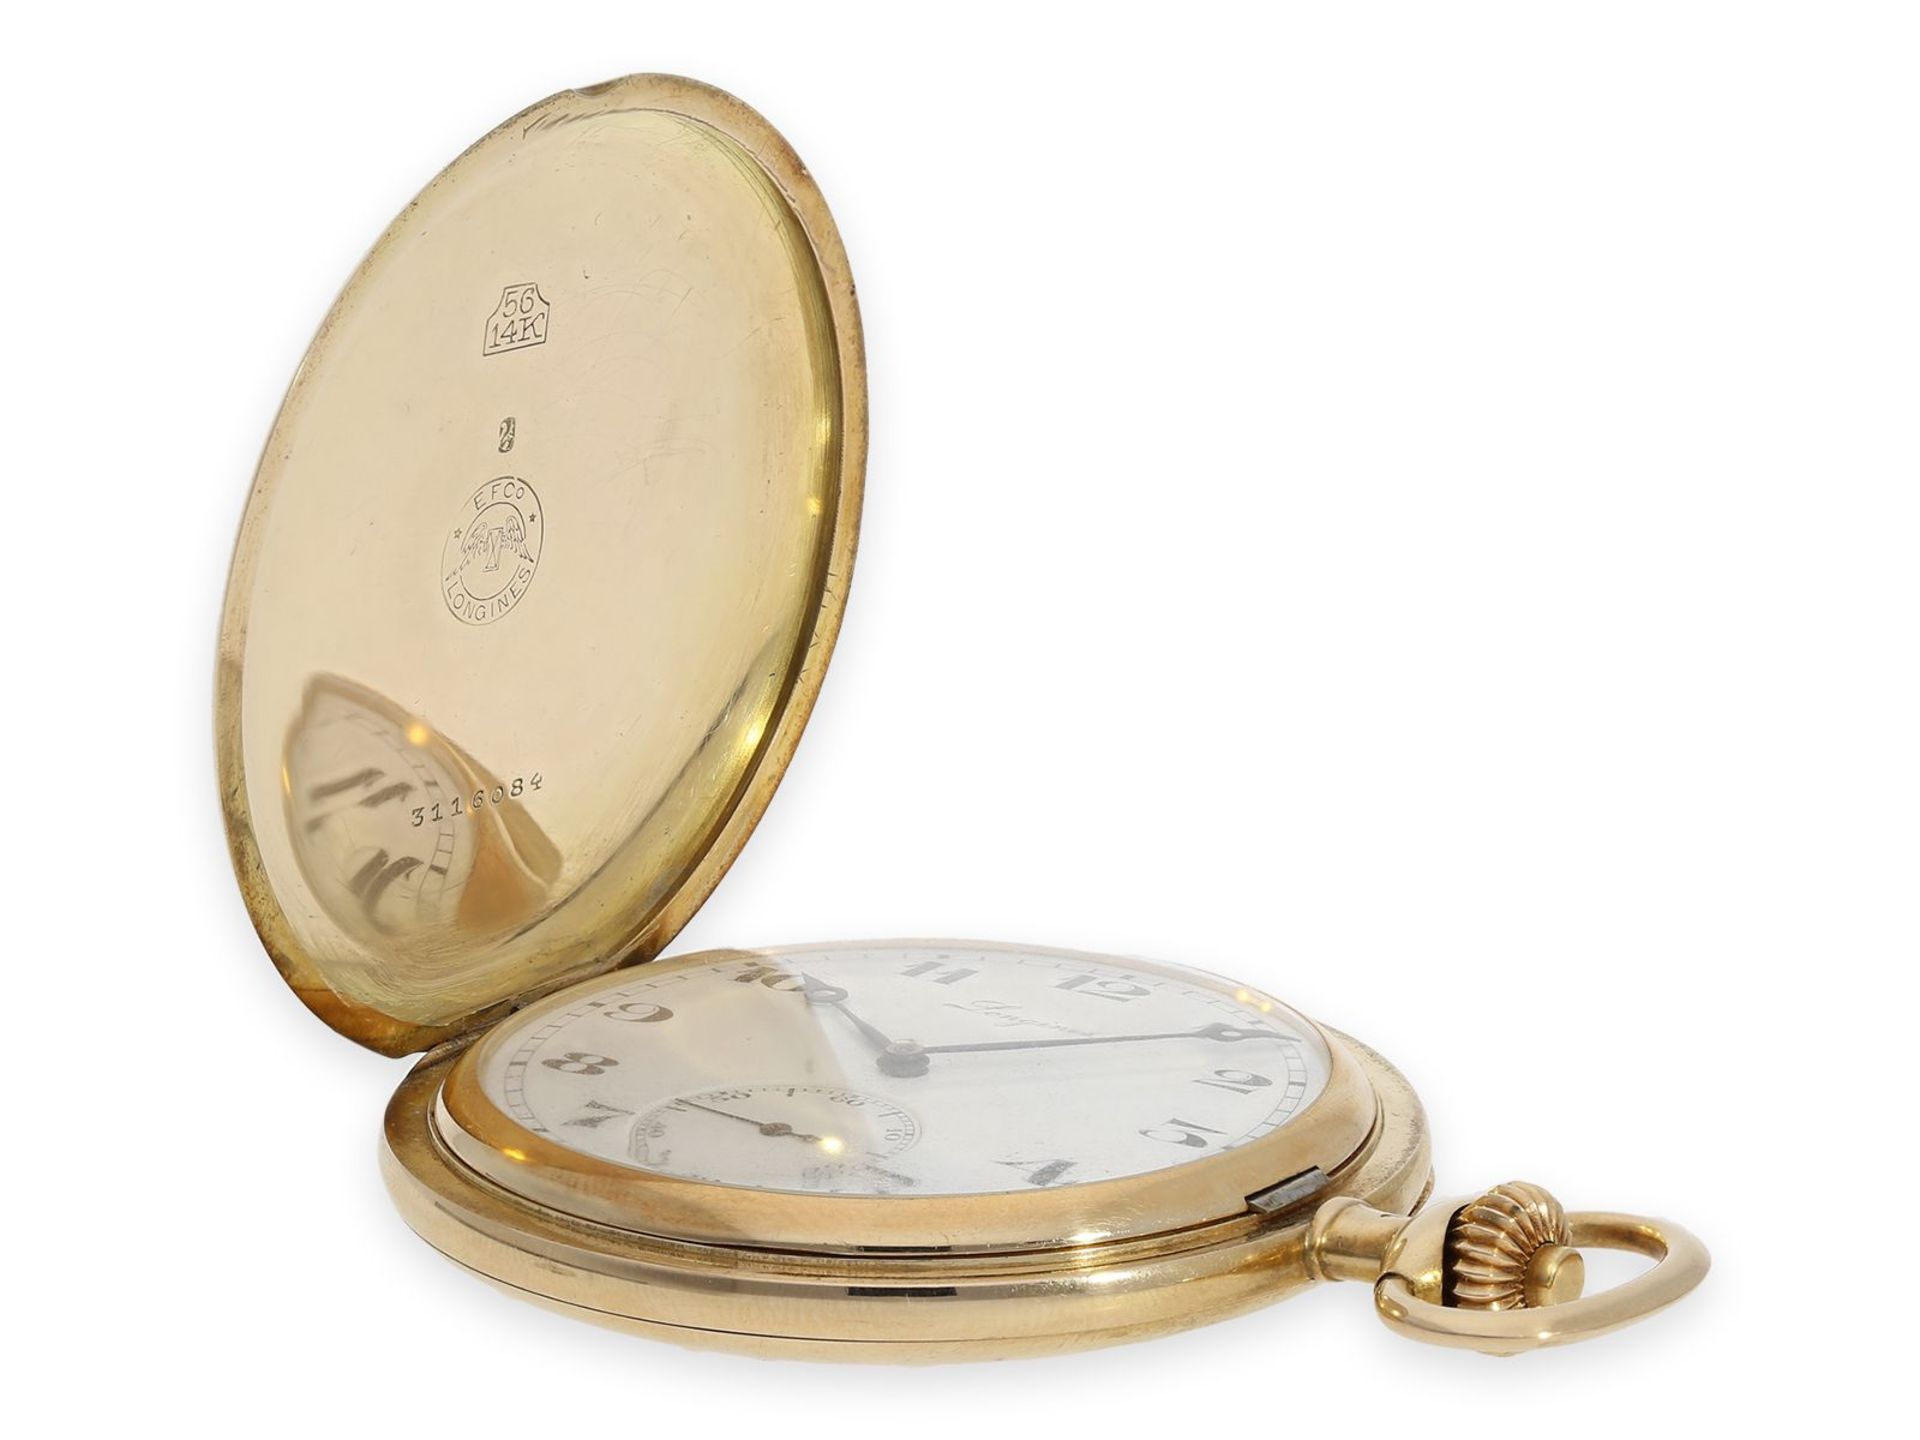 Taschenuhr: qualitätsvolle Goldsavonnette der Marke Longines, Ankerchronometer Kaliber 19.80, ca. - Image 4 of 7